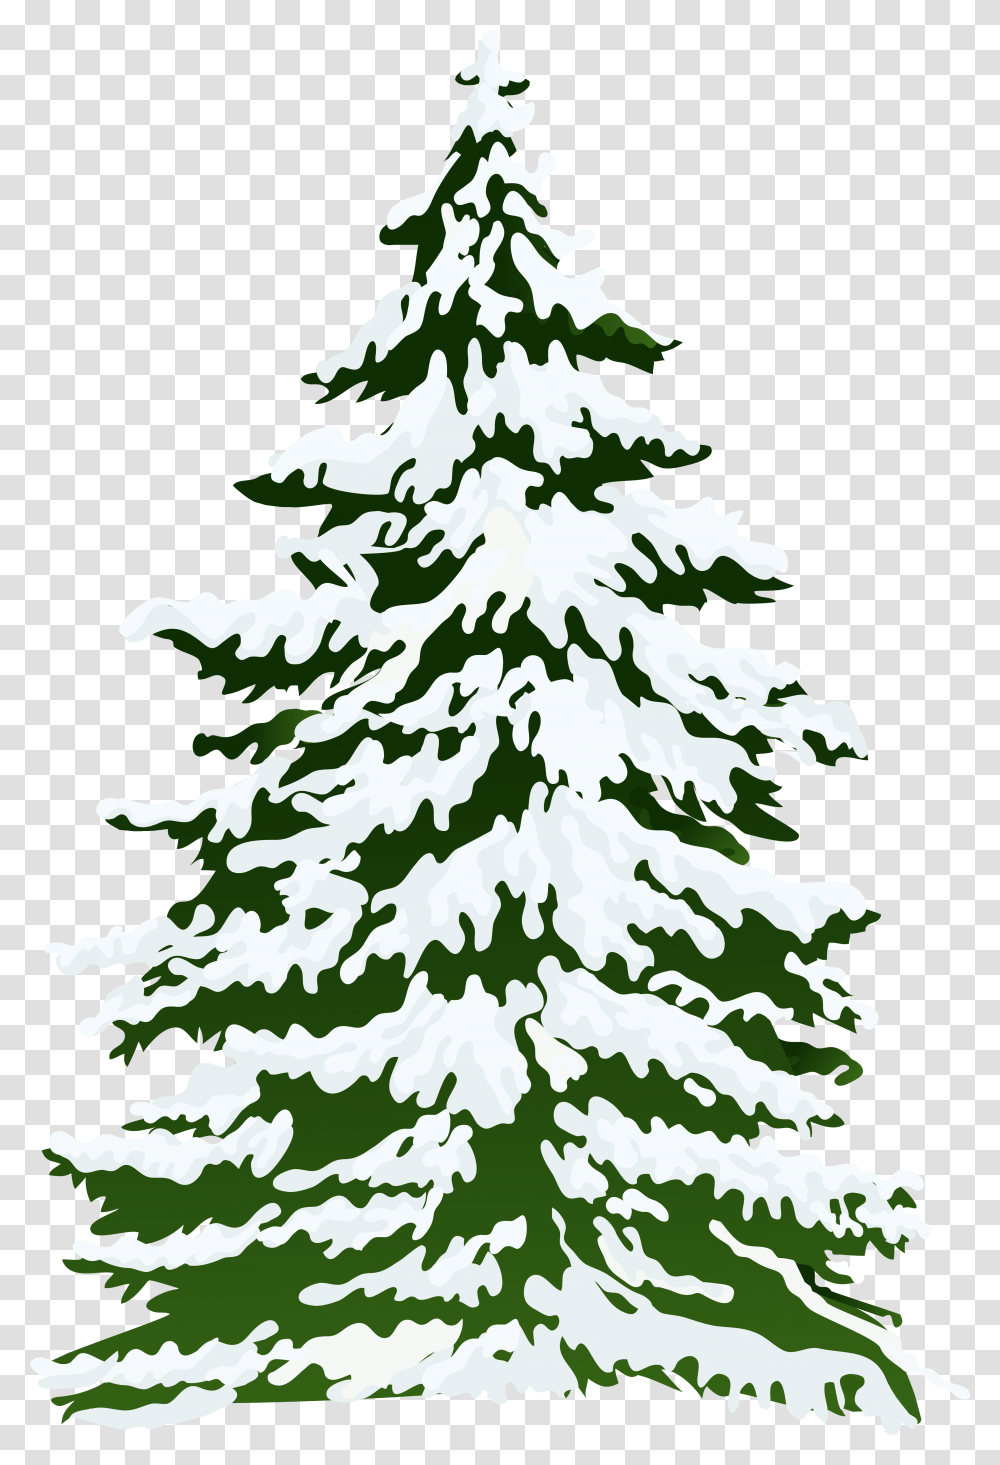 Winter Snowy Pine Tree Clipart Image Snow Clip Art Pine Tree, Plant, Ornament, Christmas Tree, Fir Transparent Png